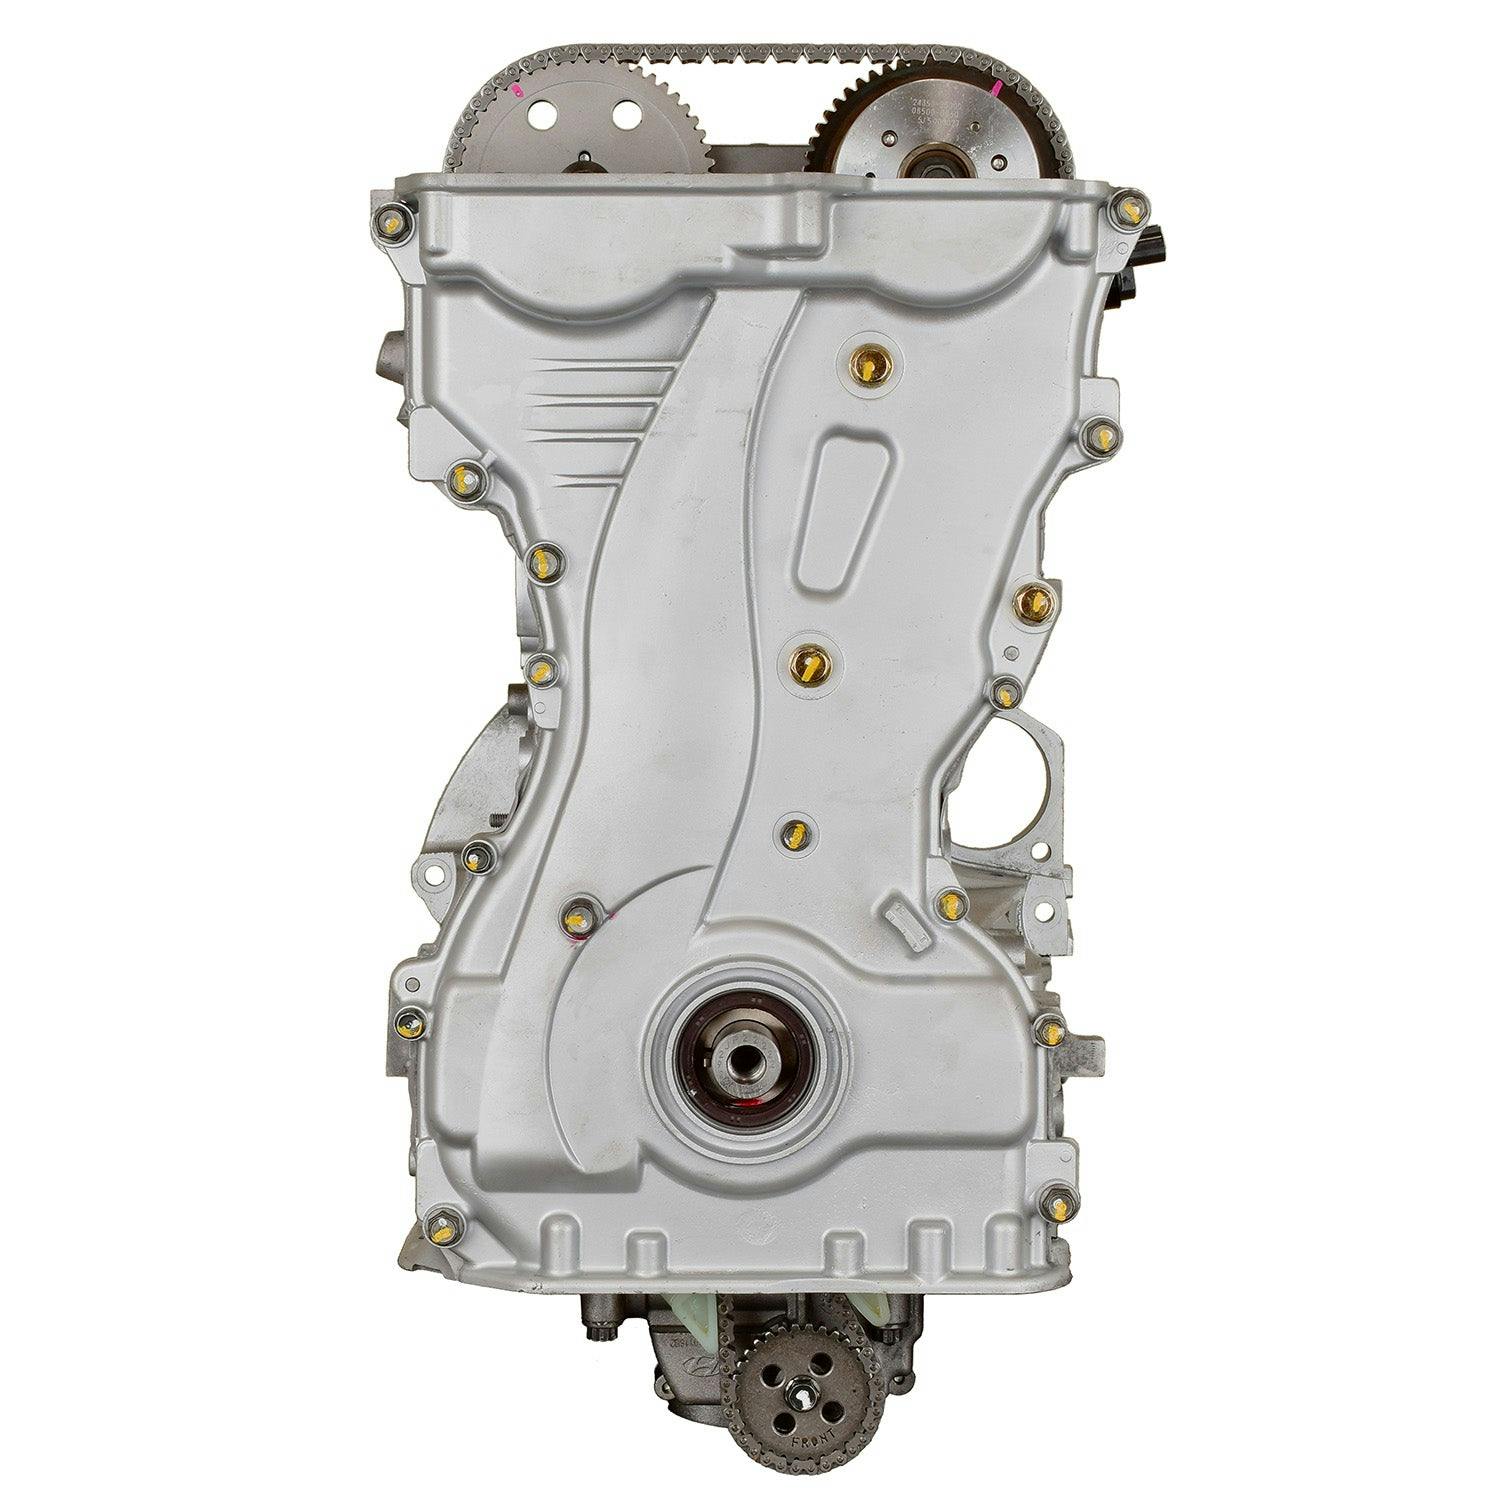 2L Inline-4 Engine for 2011-2013 Kia Forte/Forte Koup/Forte5